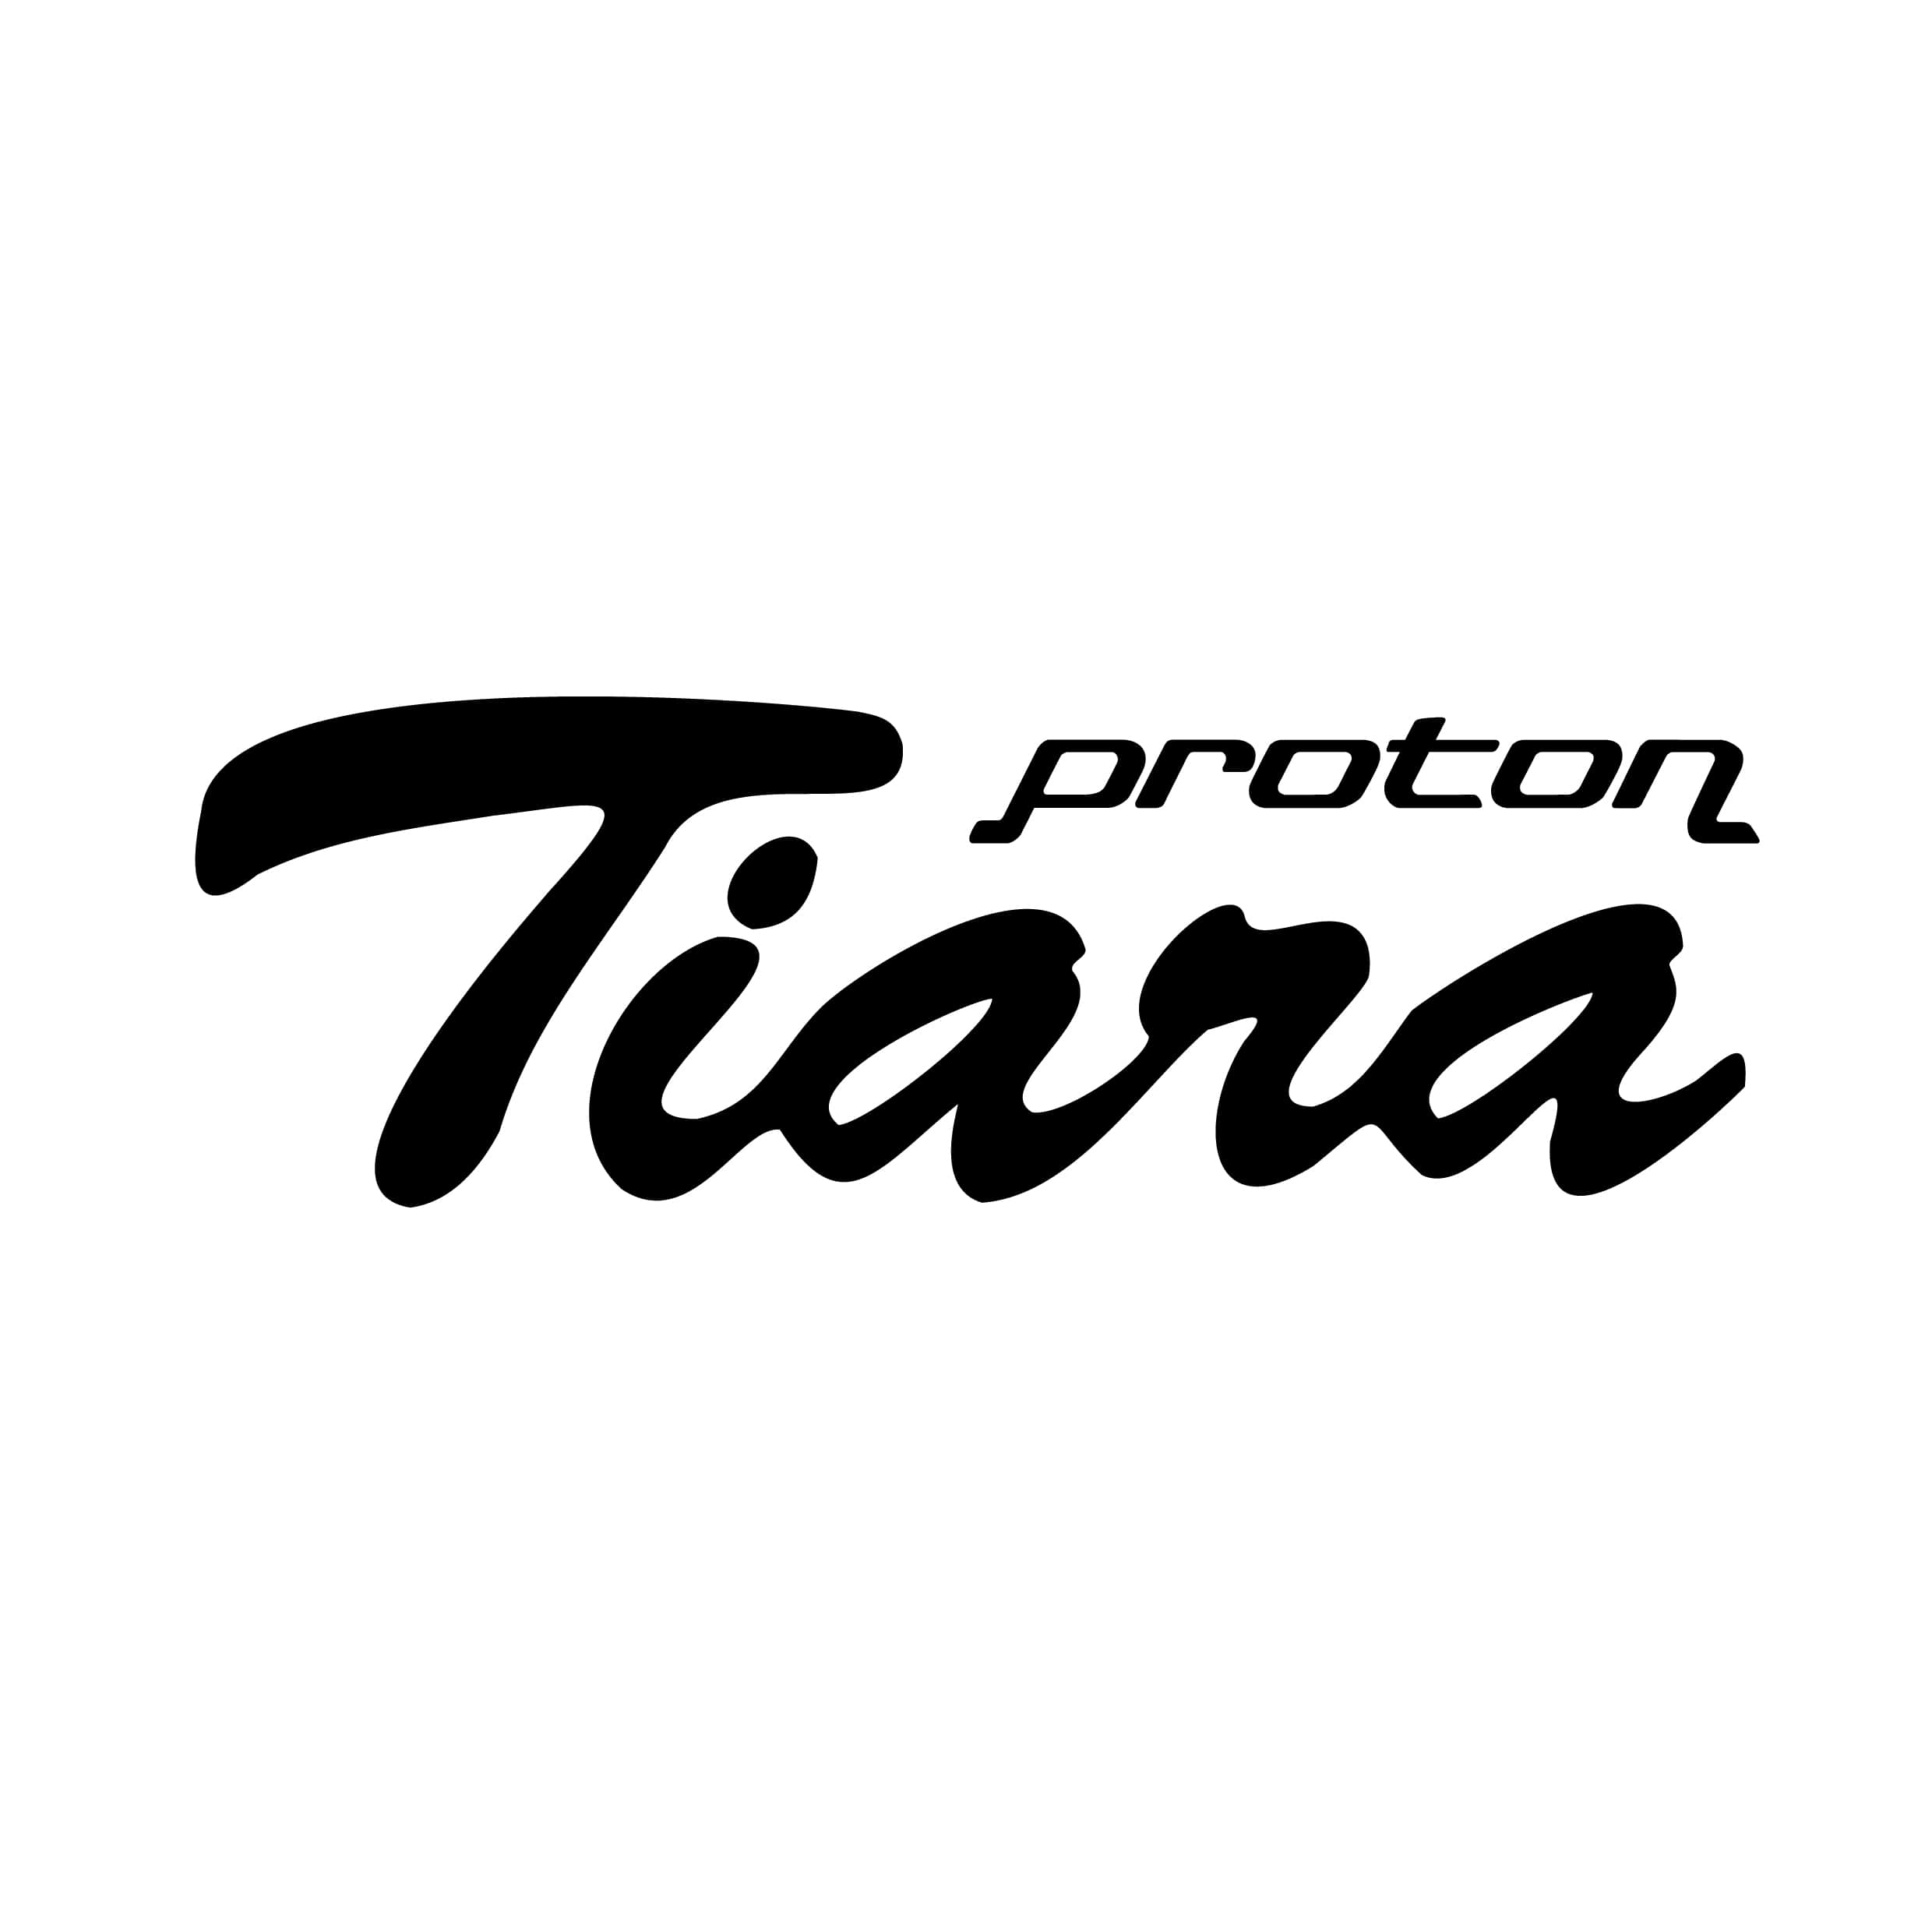 stickers-citroen-proton-tiara-ref41-autocollant-voiture-sticker-auto-autocollants-decals-sponsors-racing-tuning-sport-logo-min